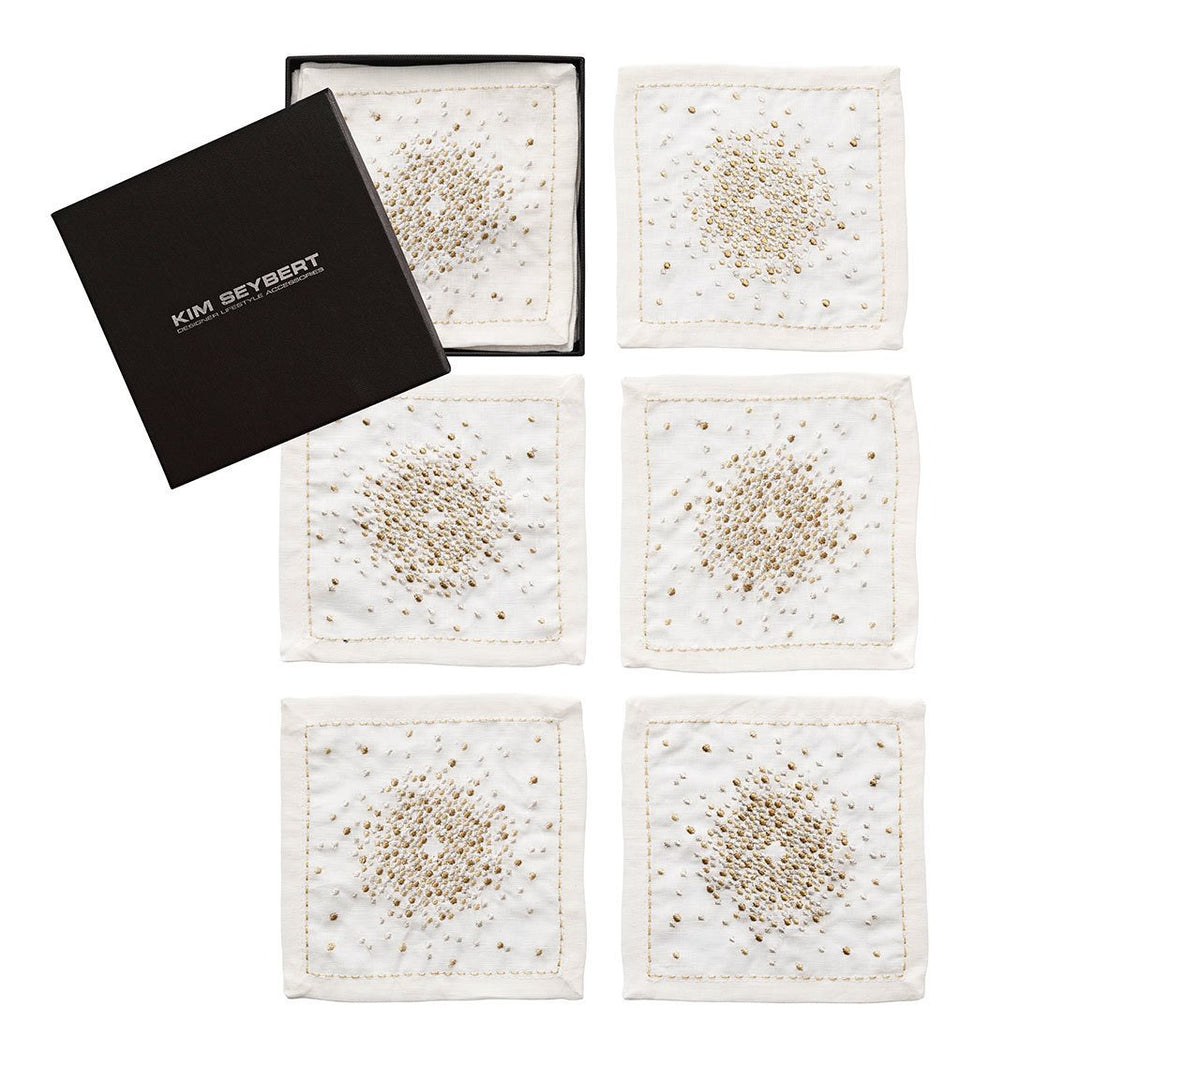 Kim Seybert Luxury Starburst Cocktail Napkins in White, Gold & Silver, Set of 6 in a Gift Box